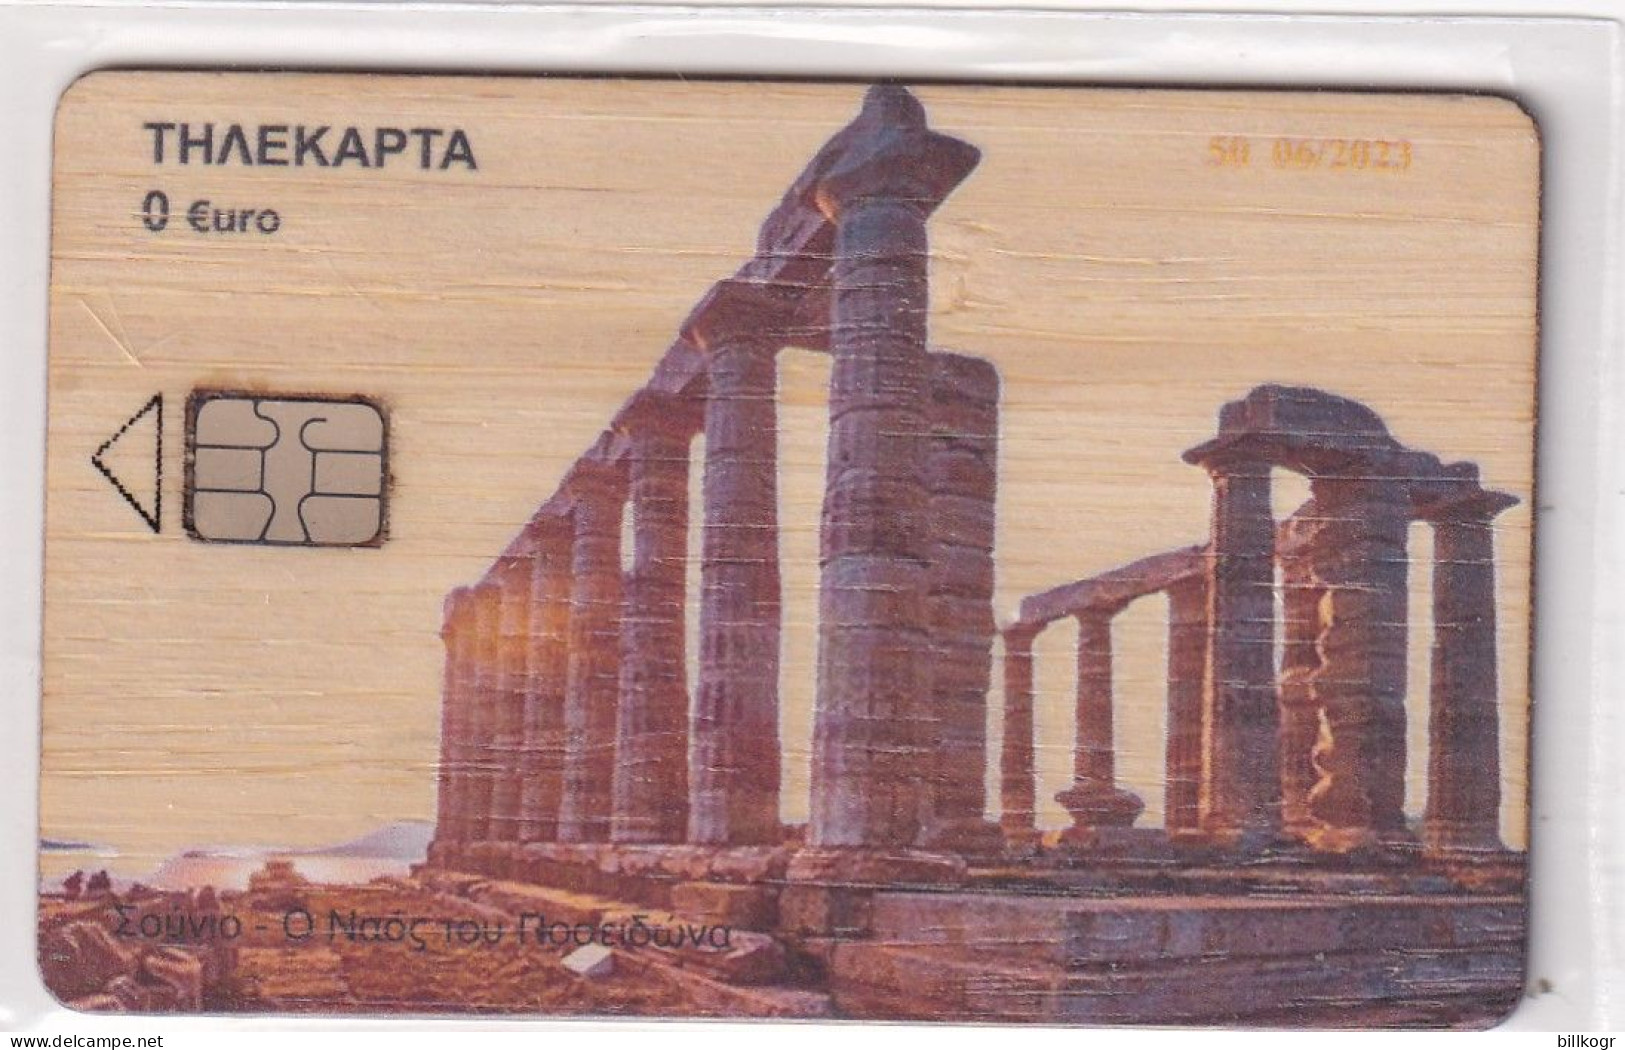 GREECE - The Temple Of Poseidon/Sounio(wooden Card), Tirage 50, 06/23, Mint - Greece